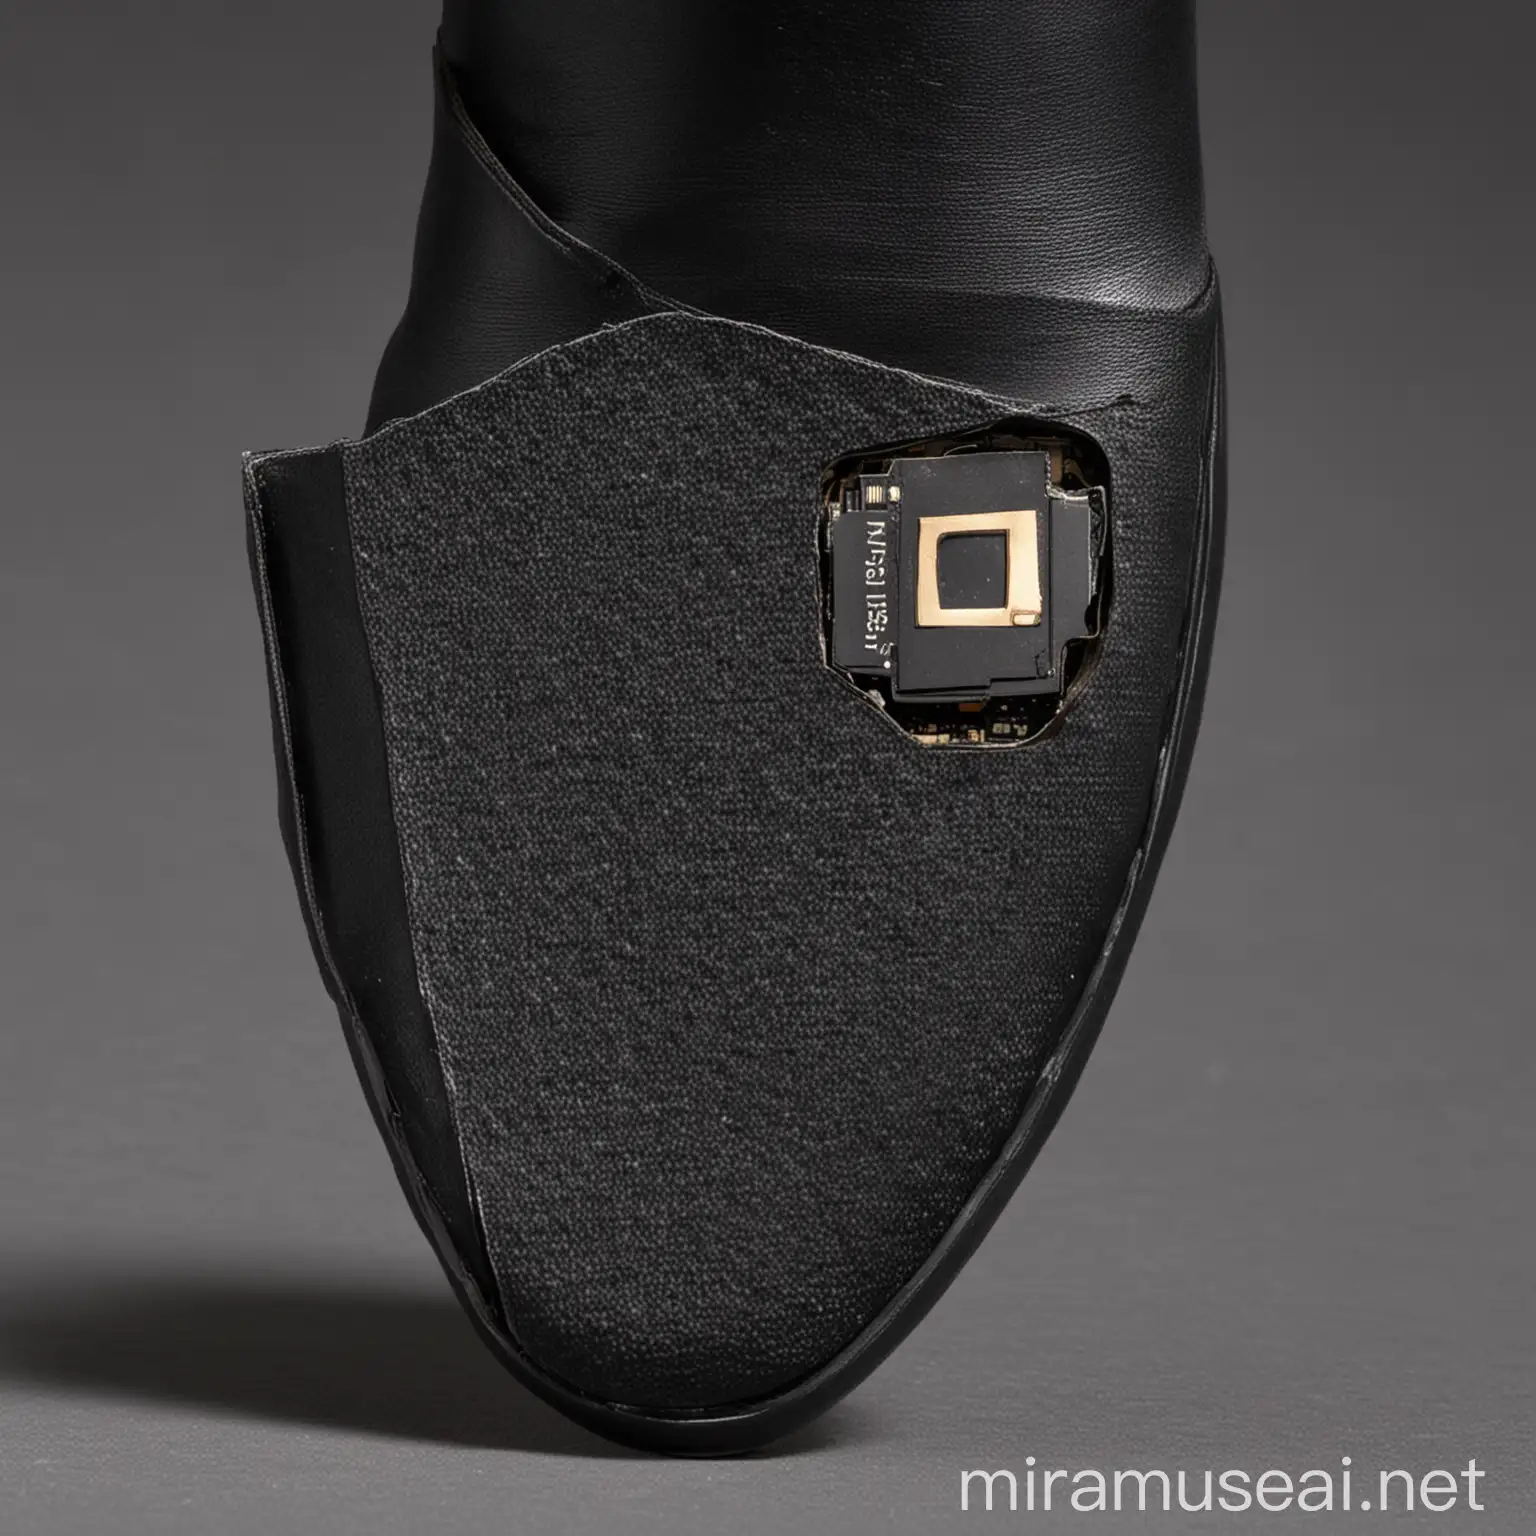 Black SplitToe Shoe with Embedded Chip